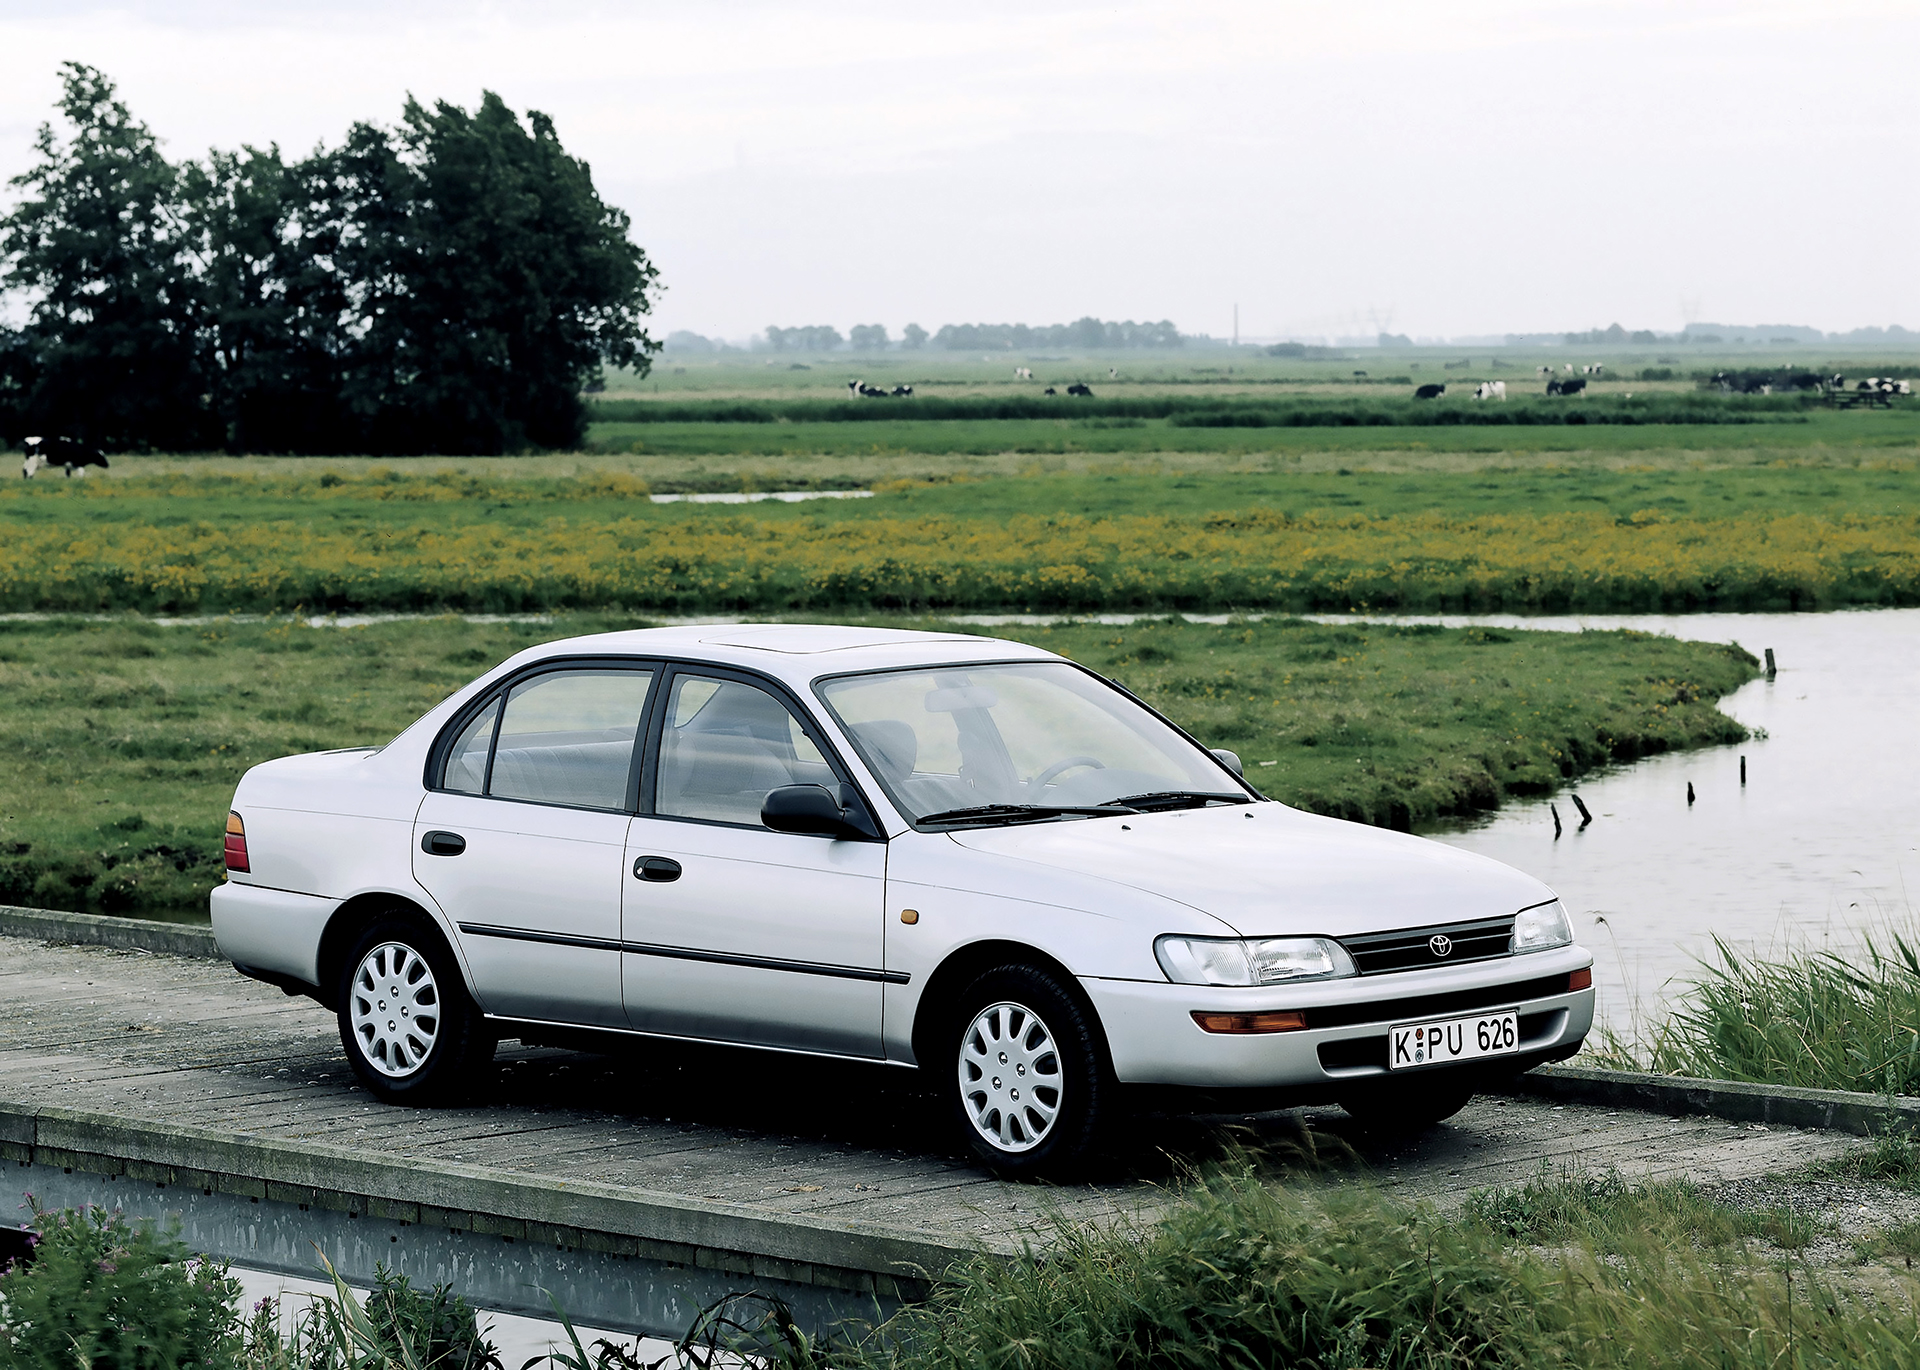 Europe - The 7th Generation Corolla (1991 - 1995)